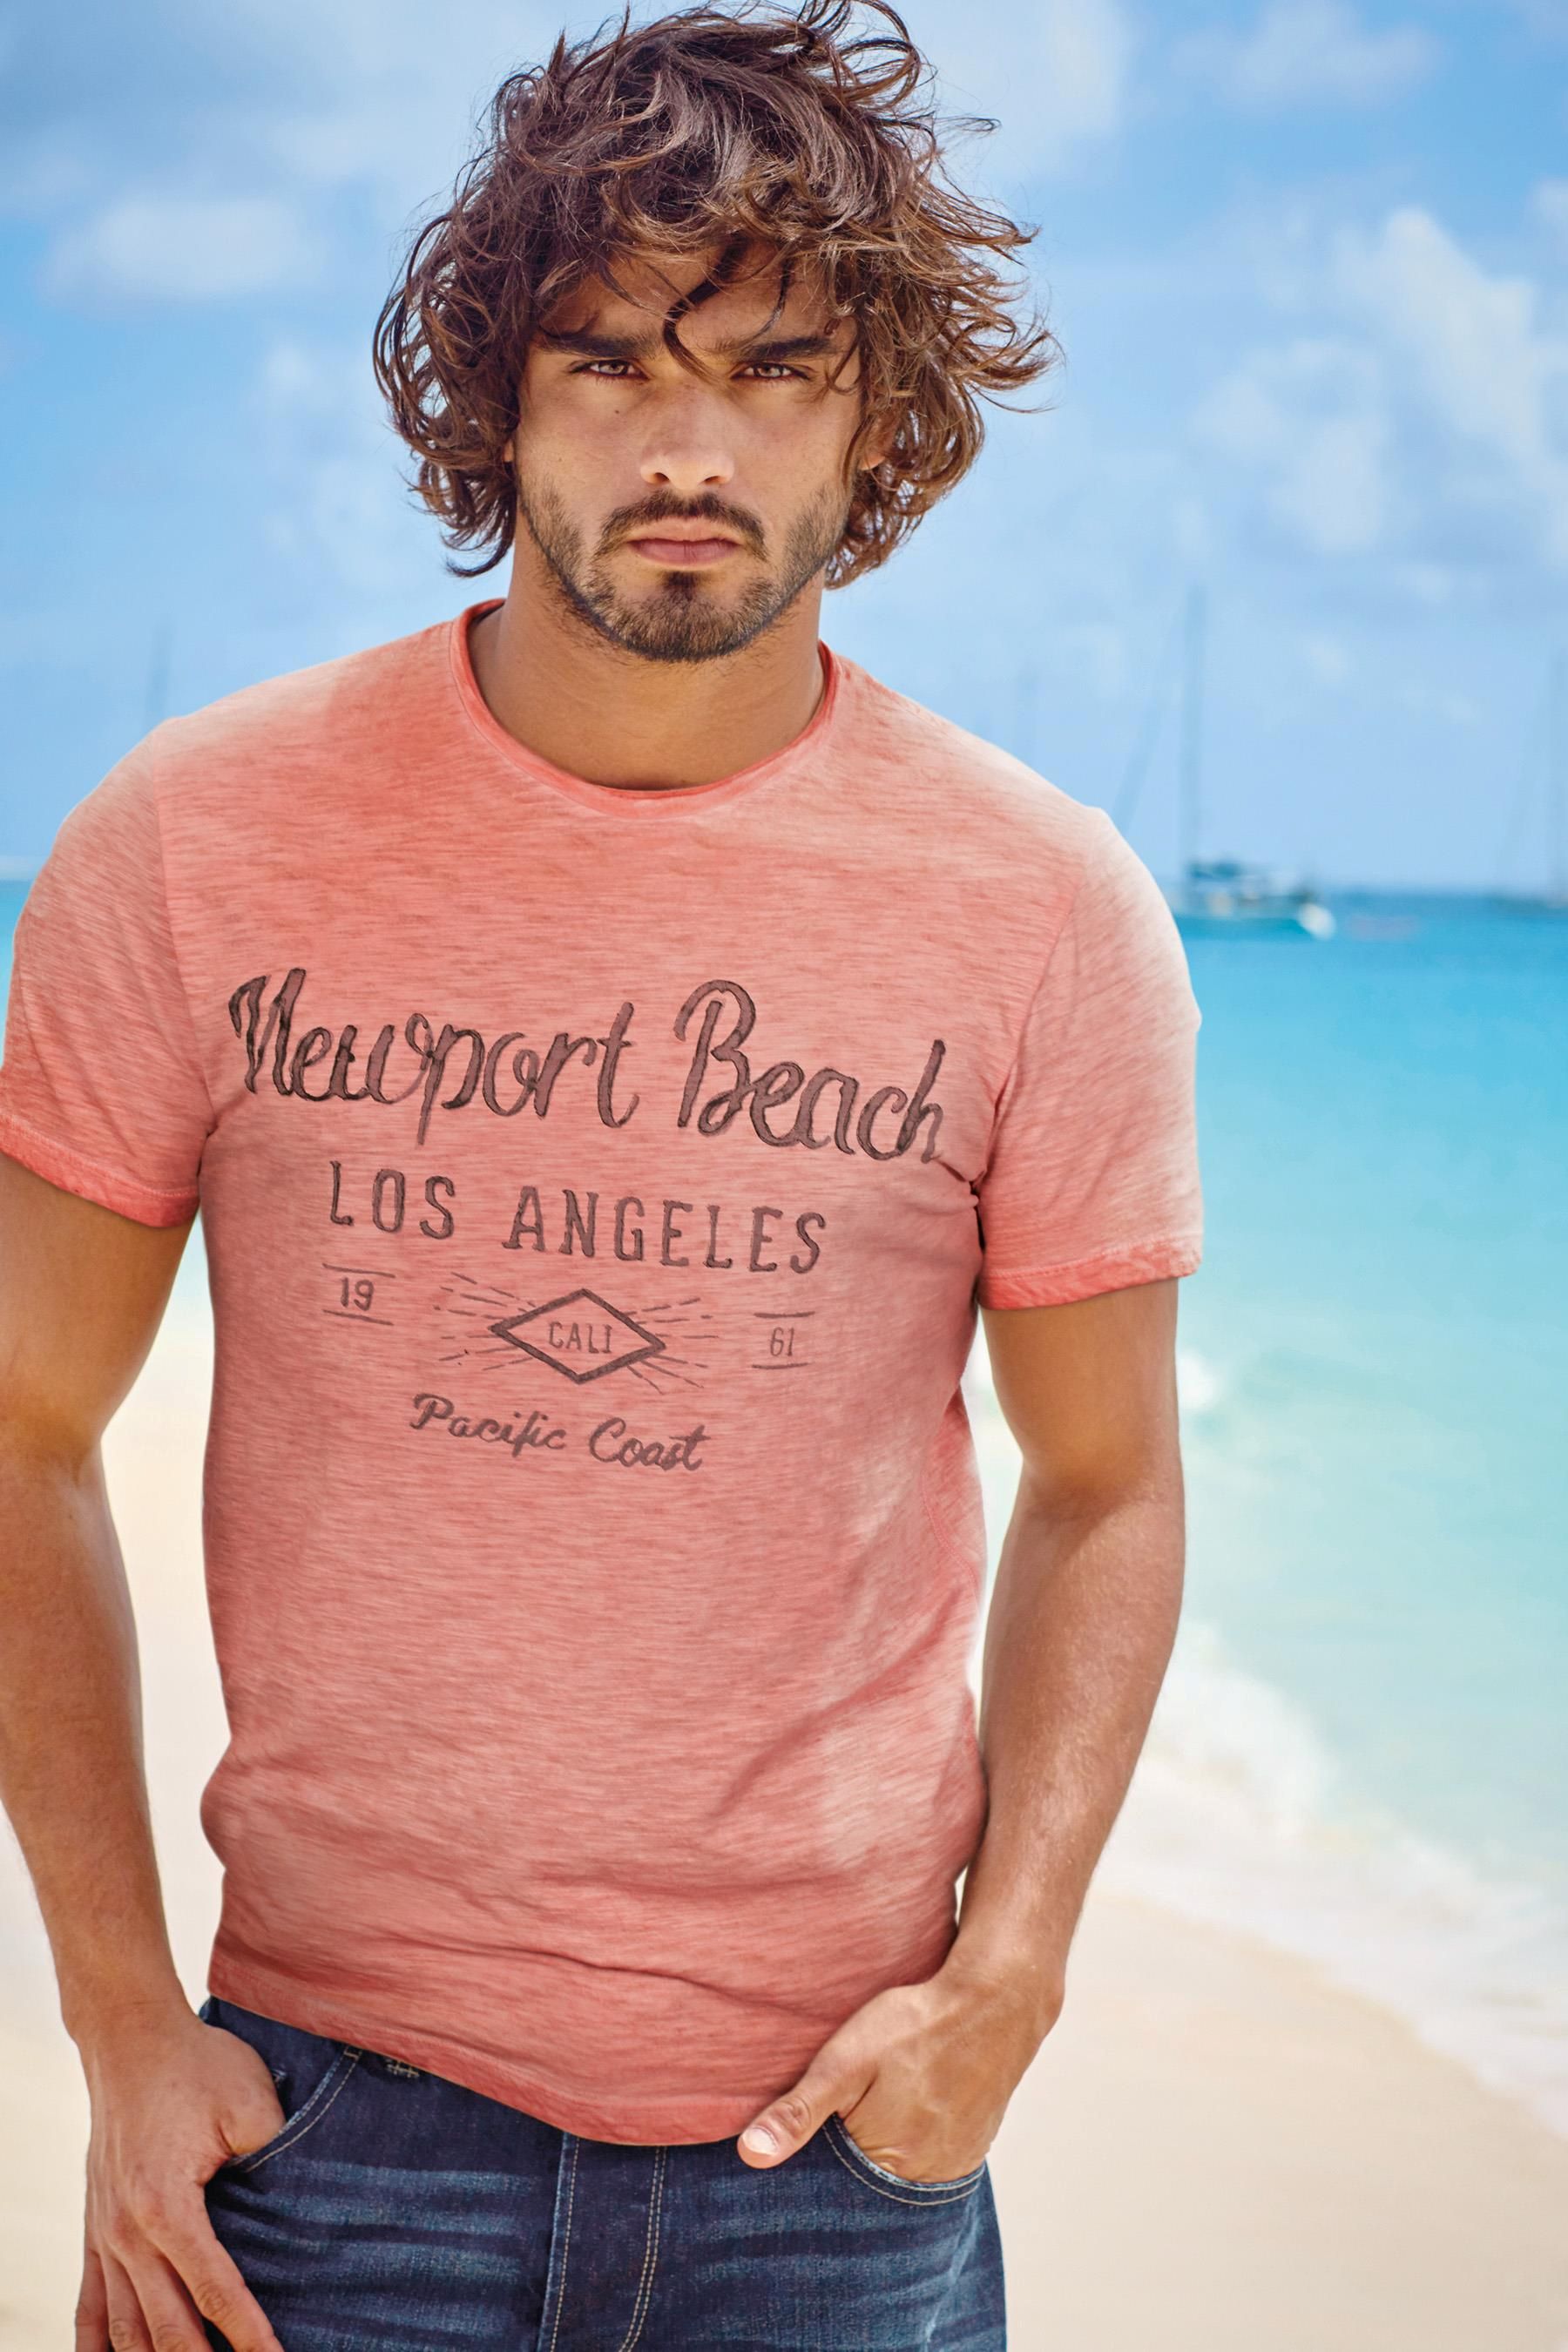 Marlon Teixeira Rocks Next Summer Beach Style